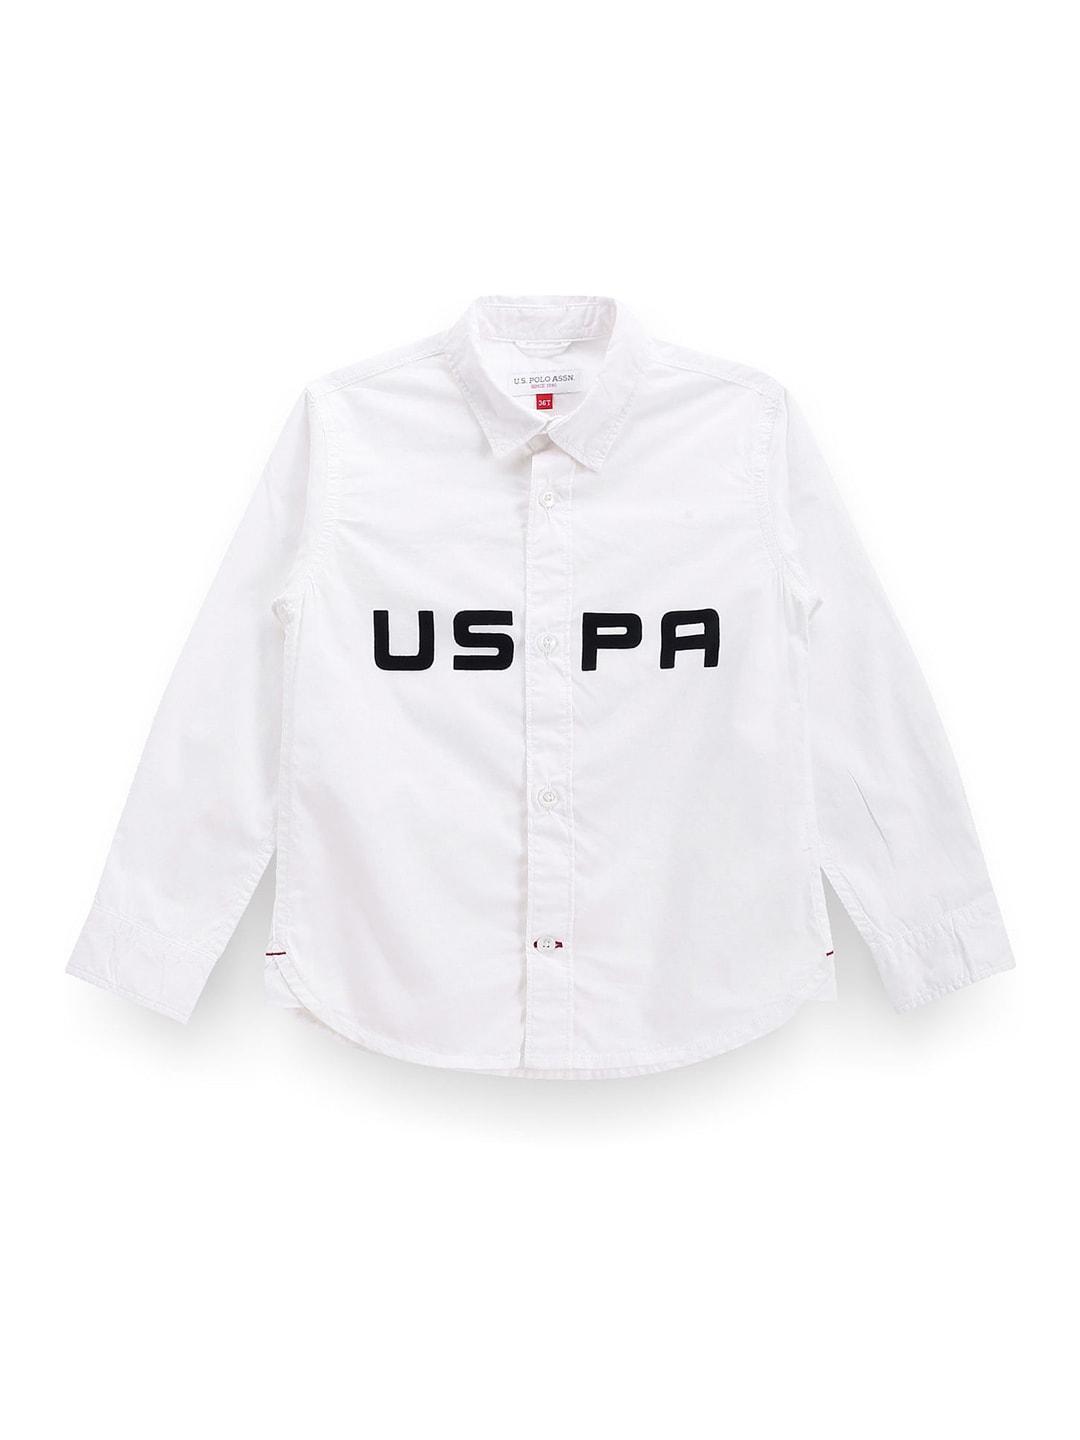 u.s. polo assn. kids boys classic fit brand logo printed casual shirt